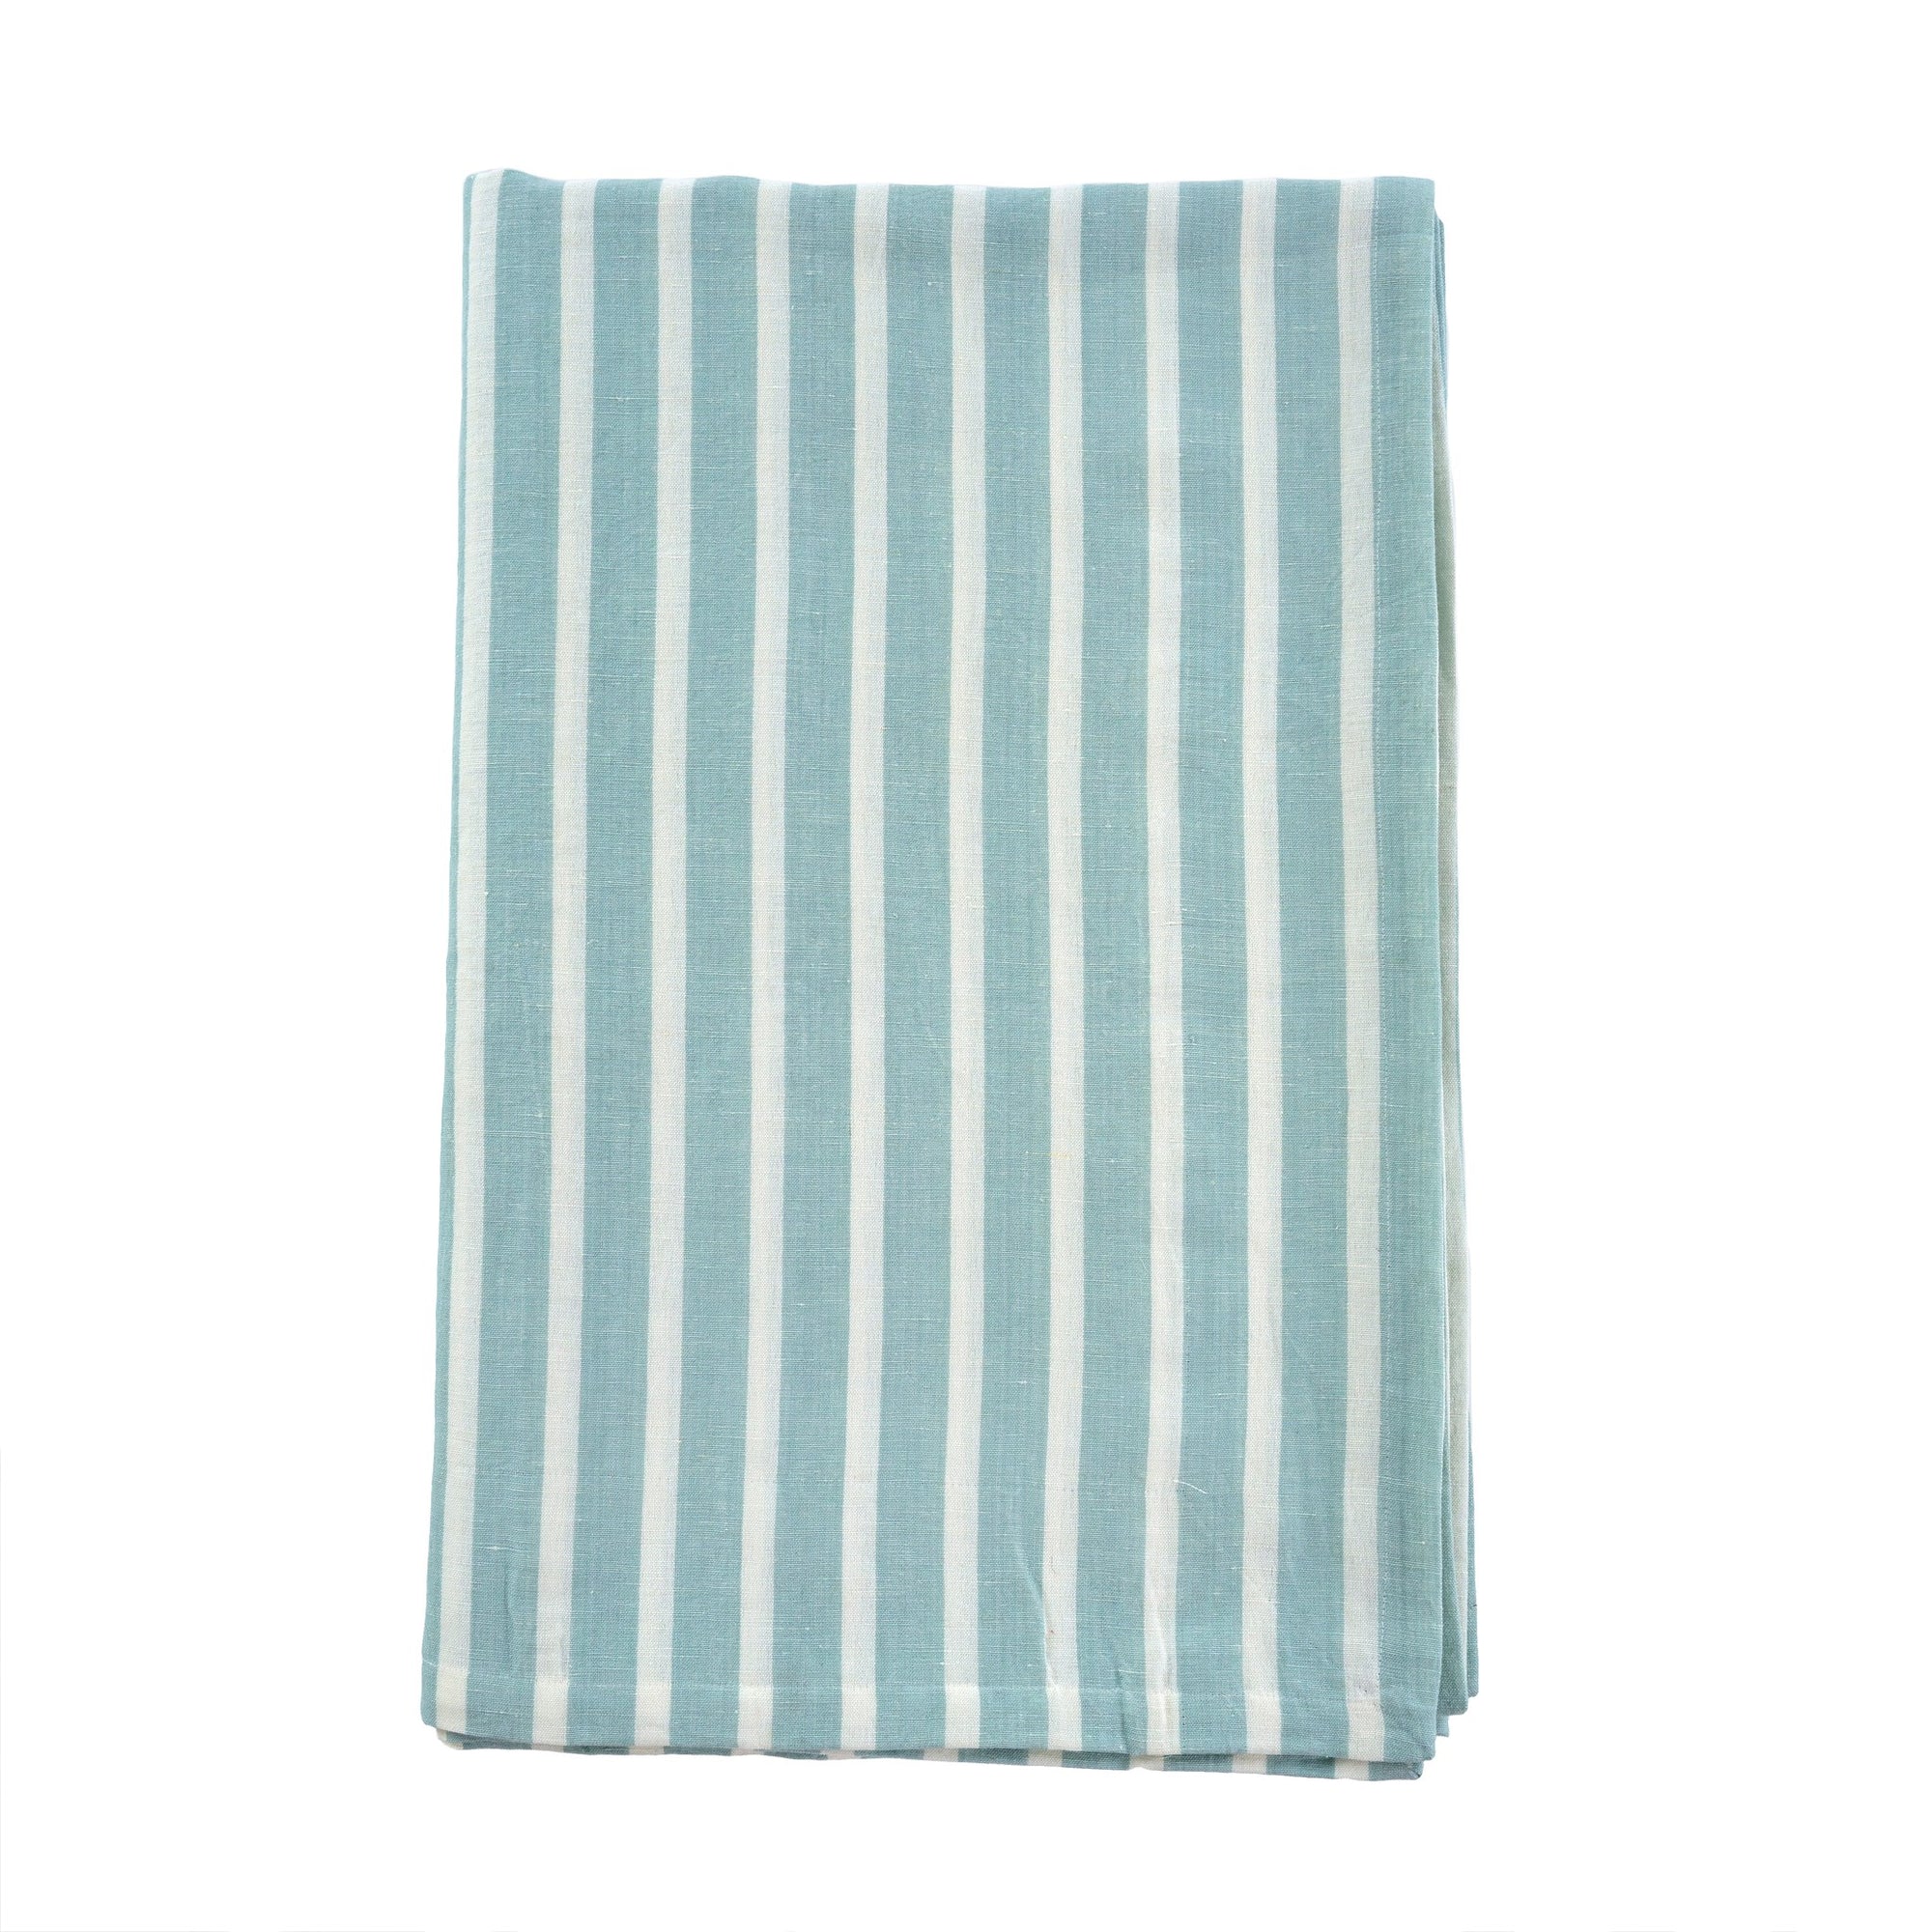 Seafoam Cotton Linen Striped Tablecloth